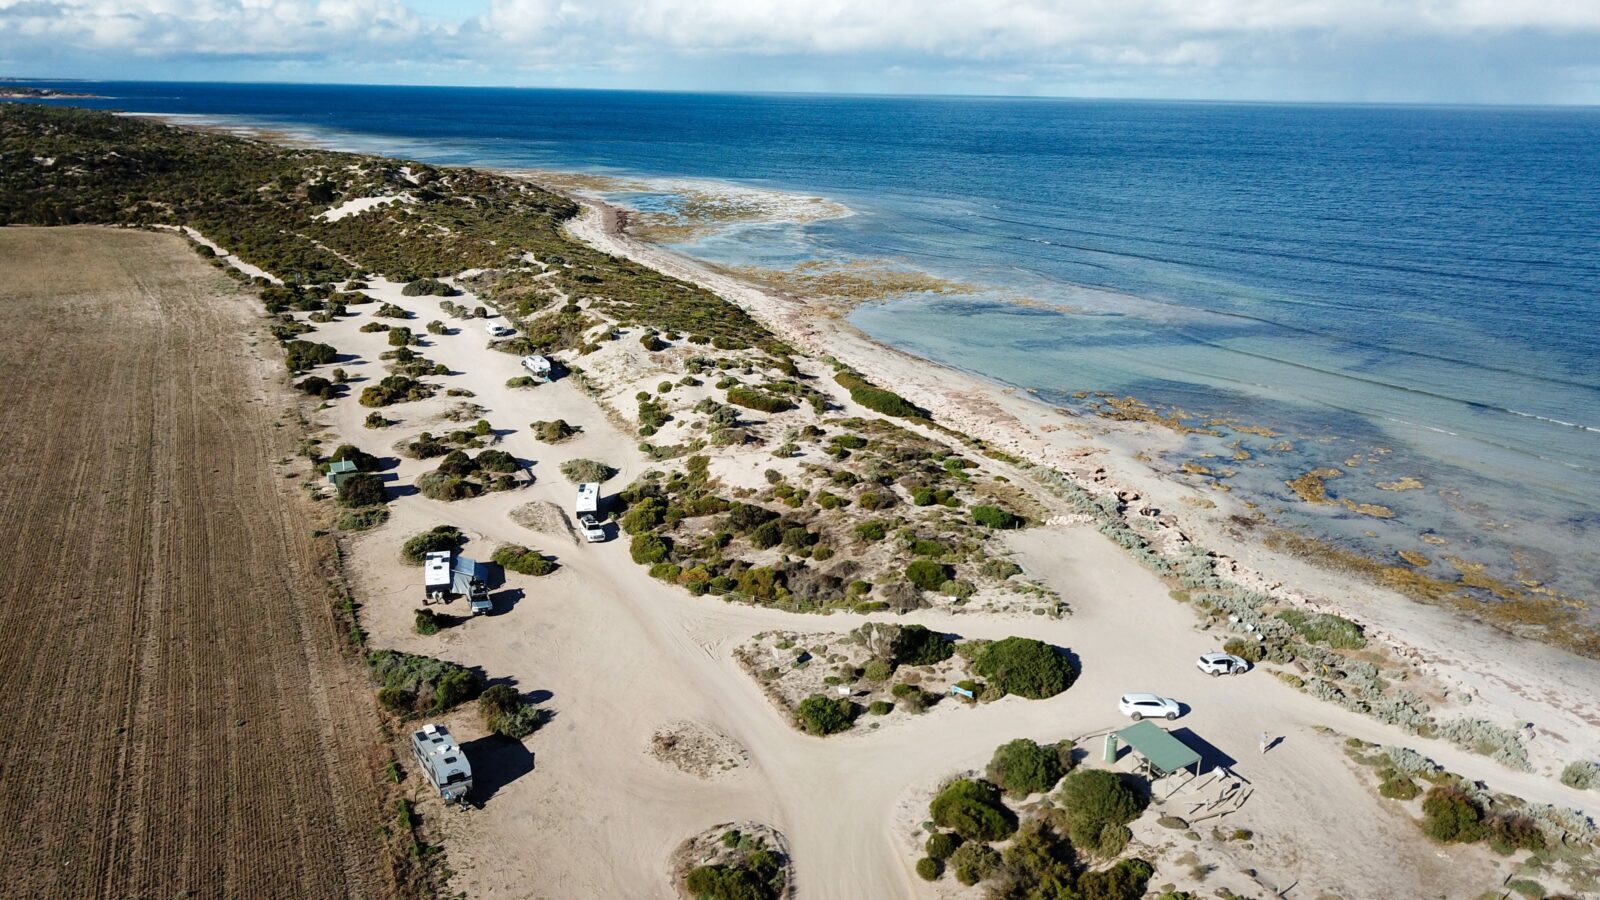 Drone view of sand track campsites, beach and aqua ocean, horizon